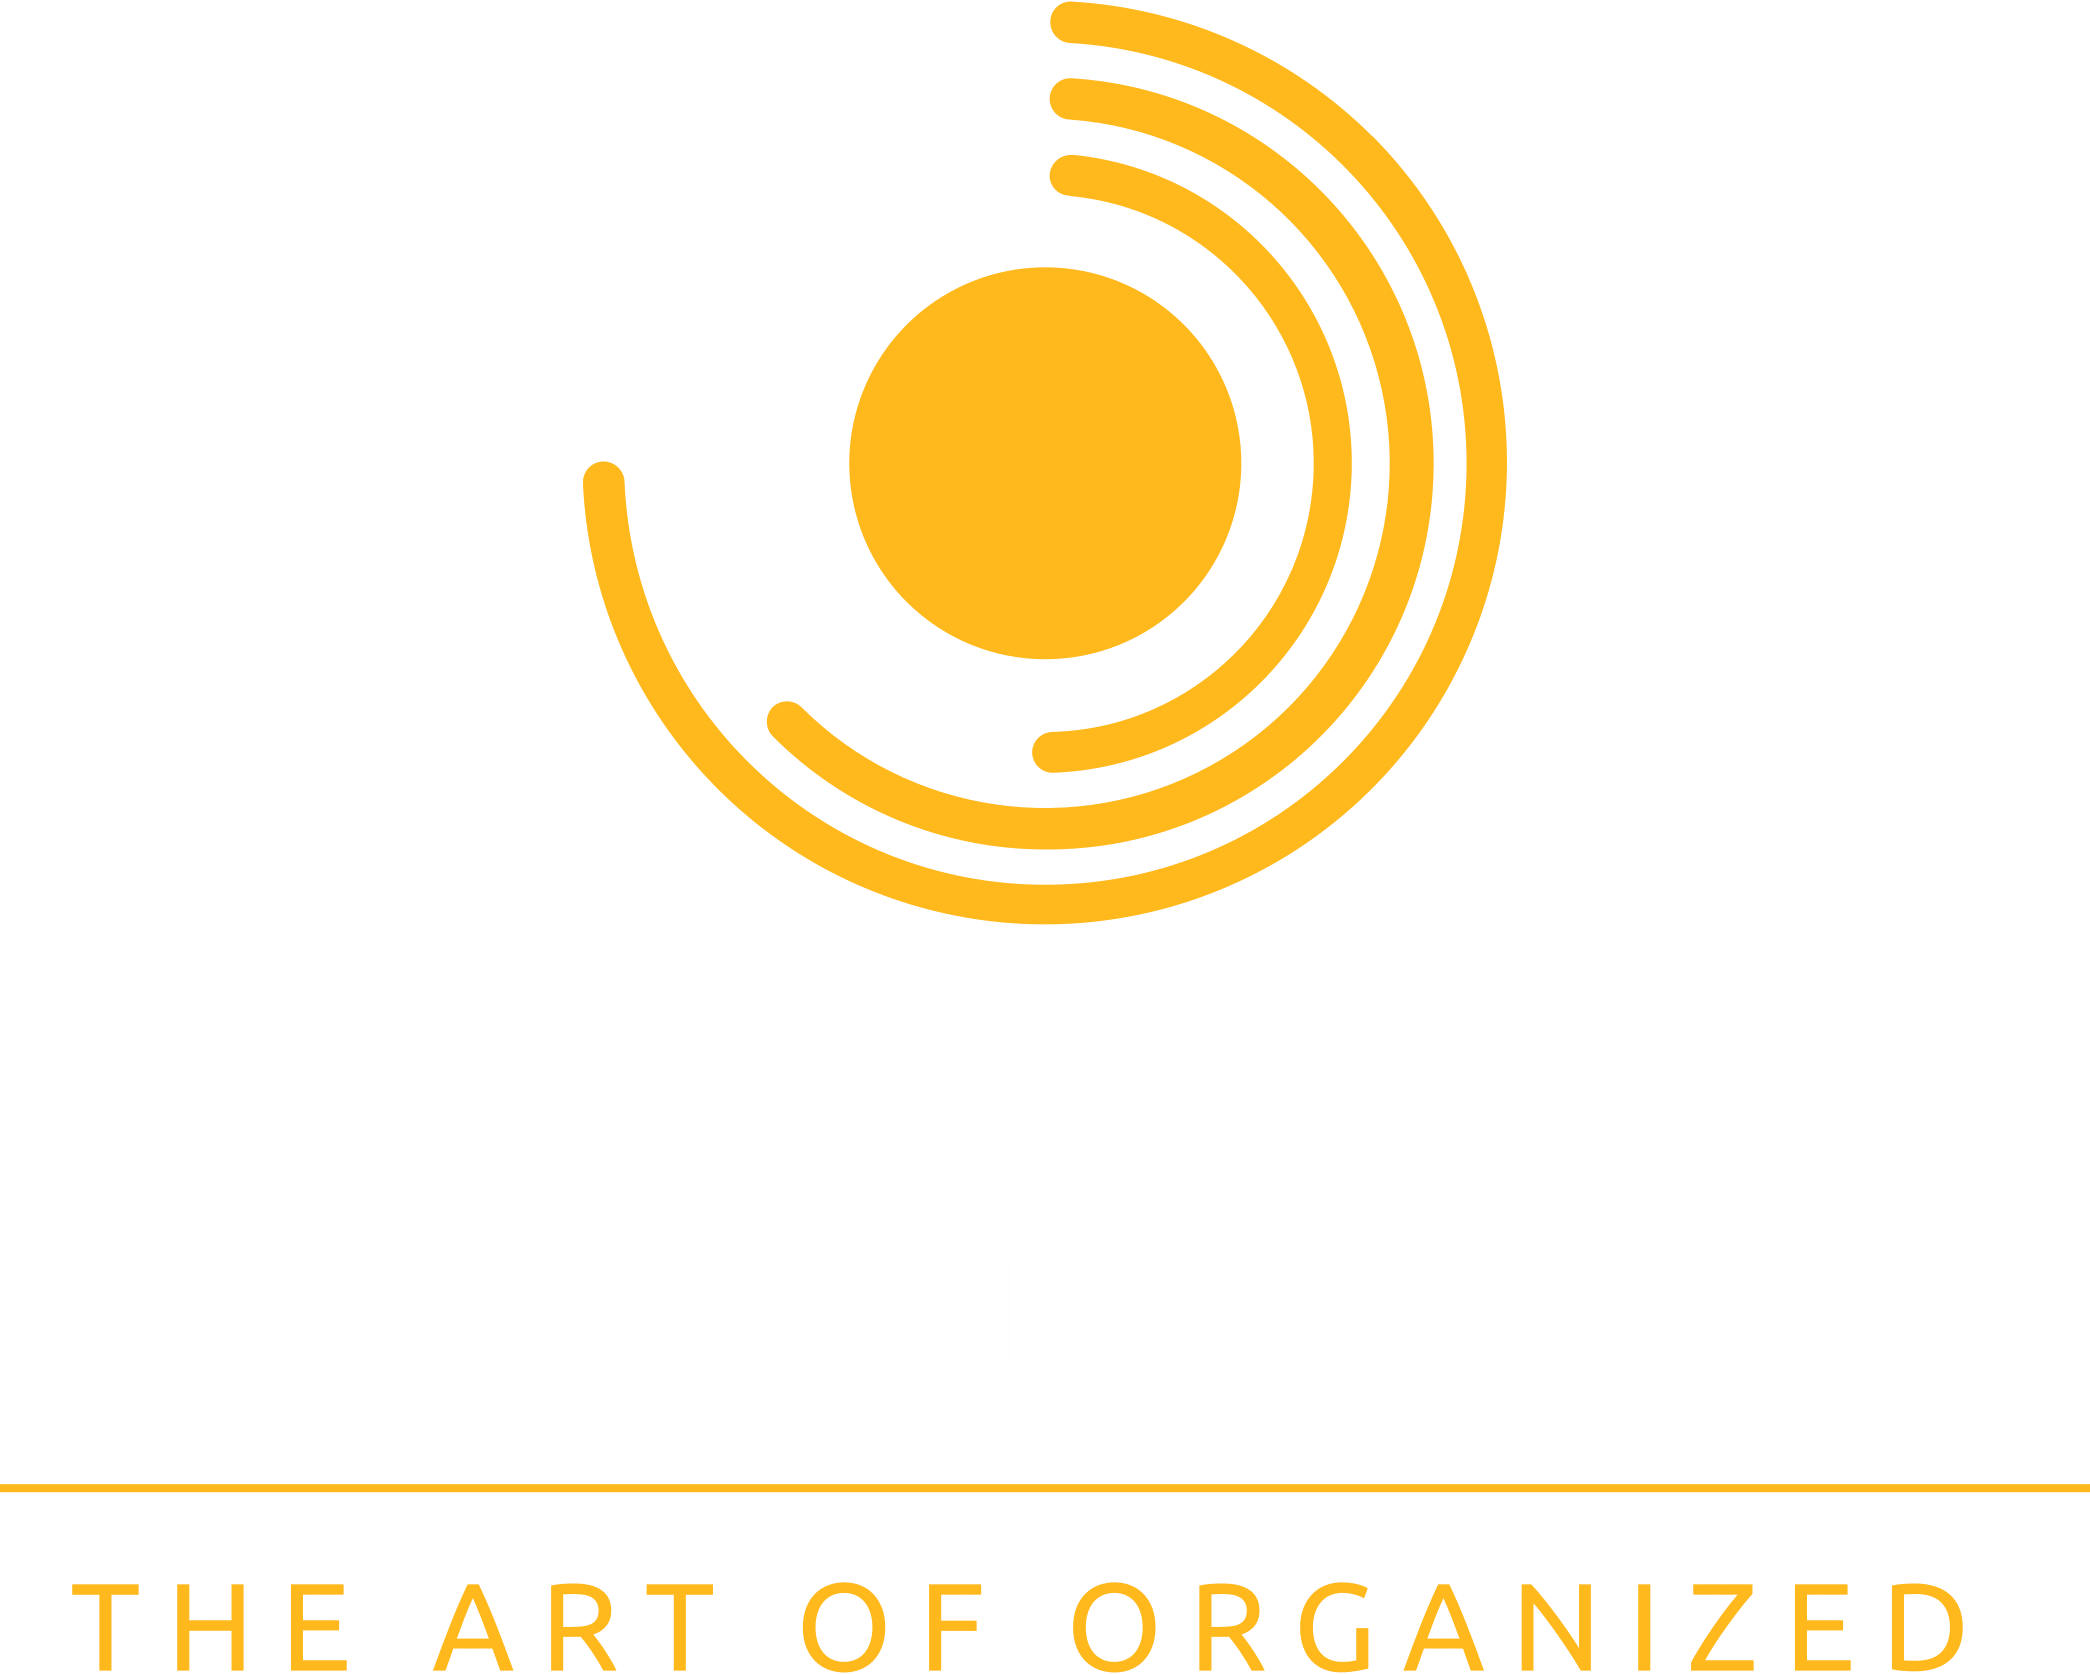 ORGXIST